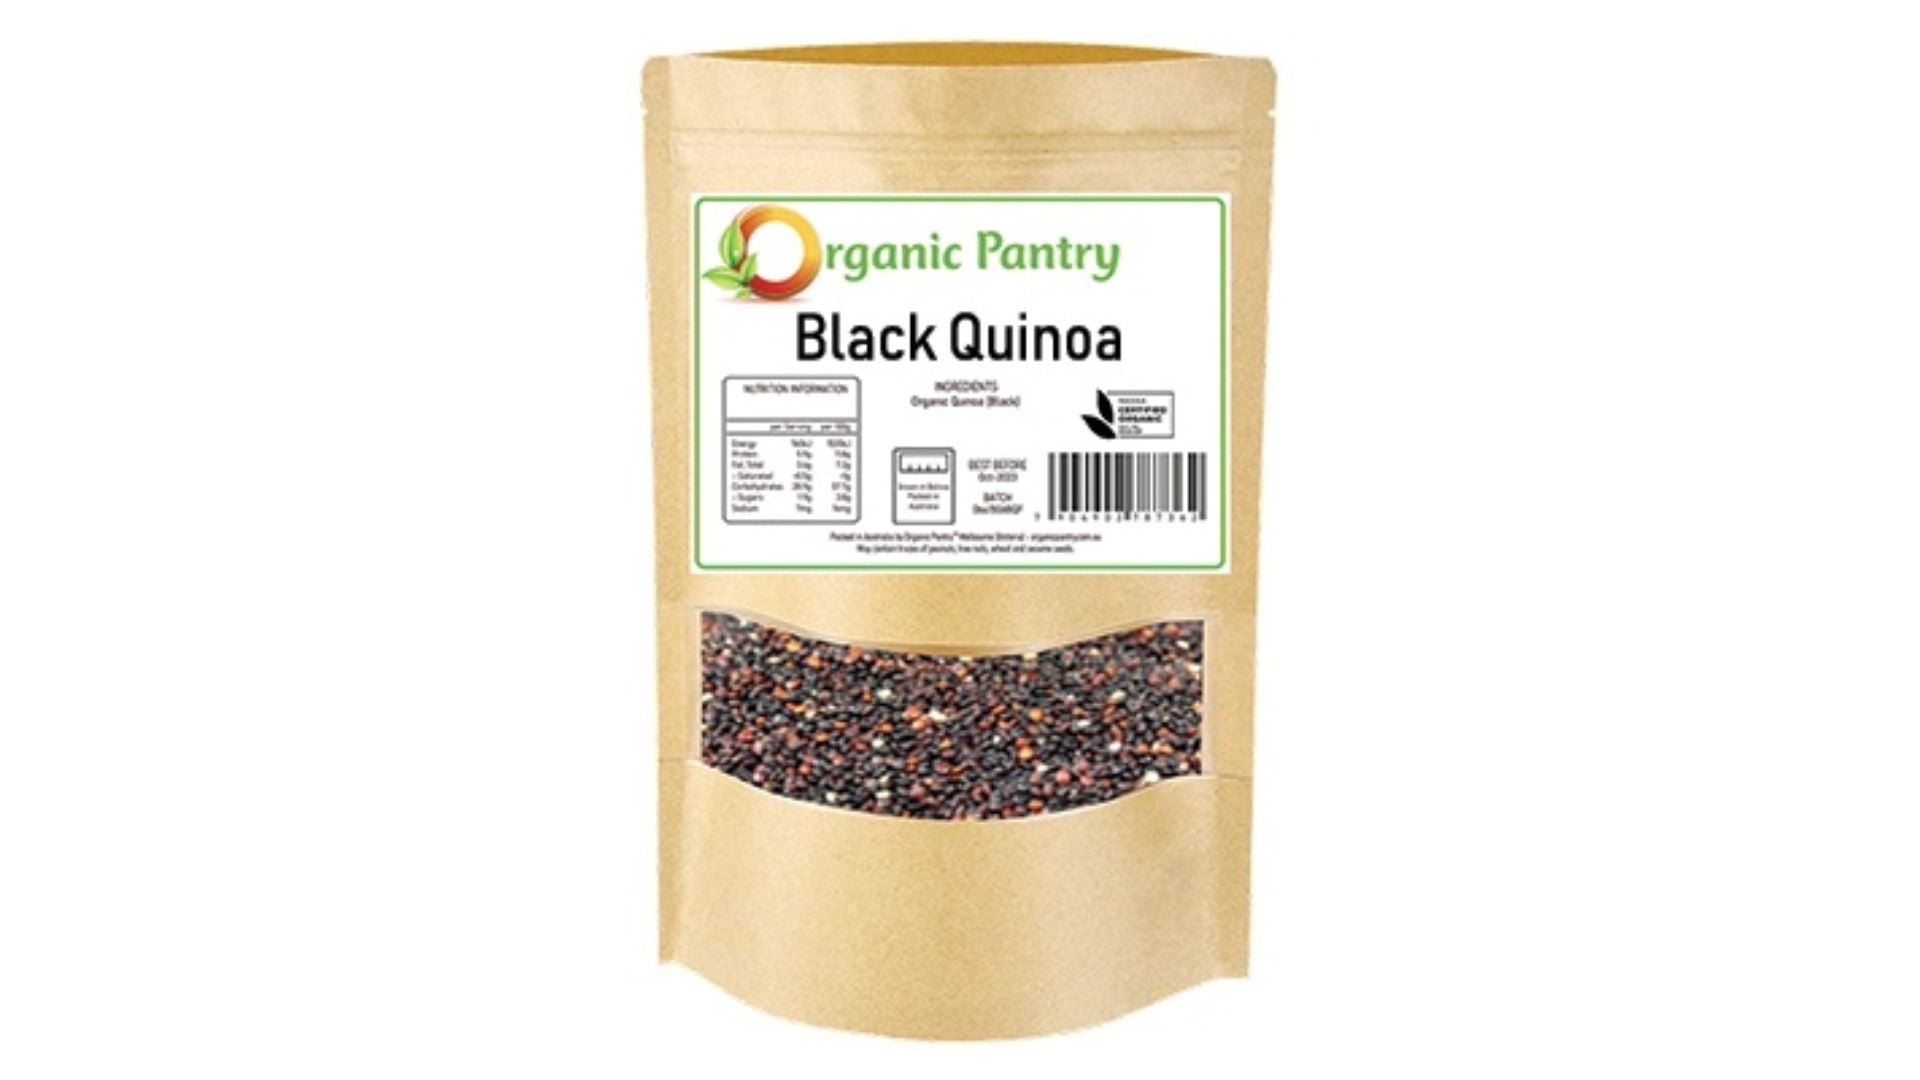 Organic Pantry Black Quinoa 500g